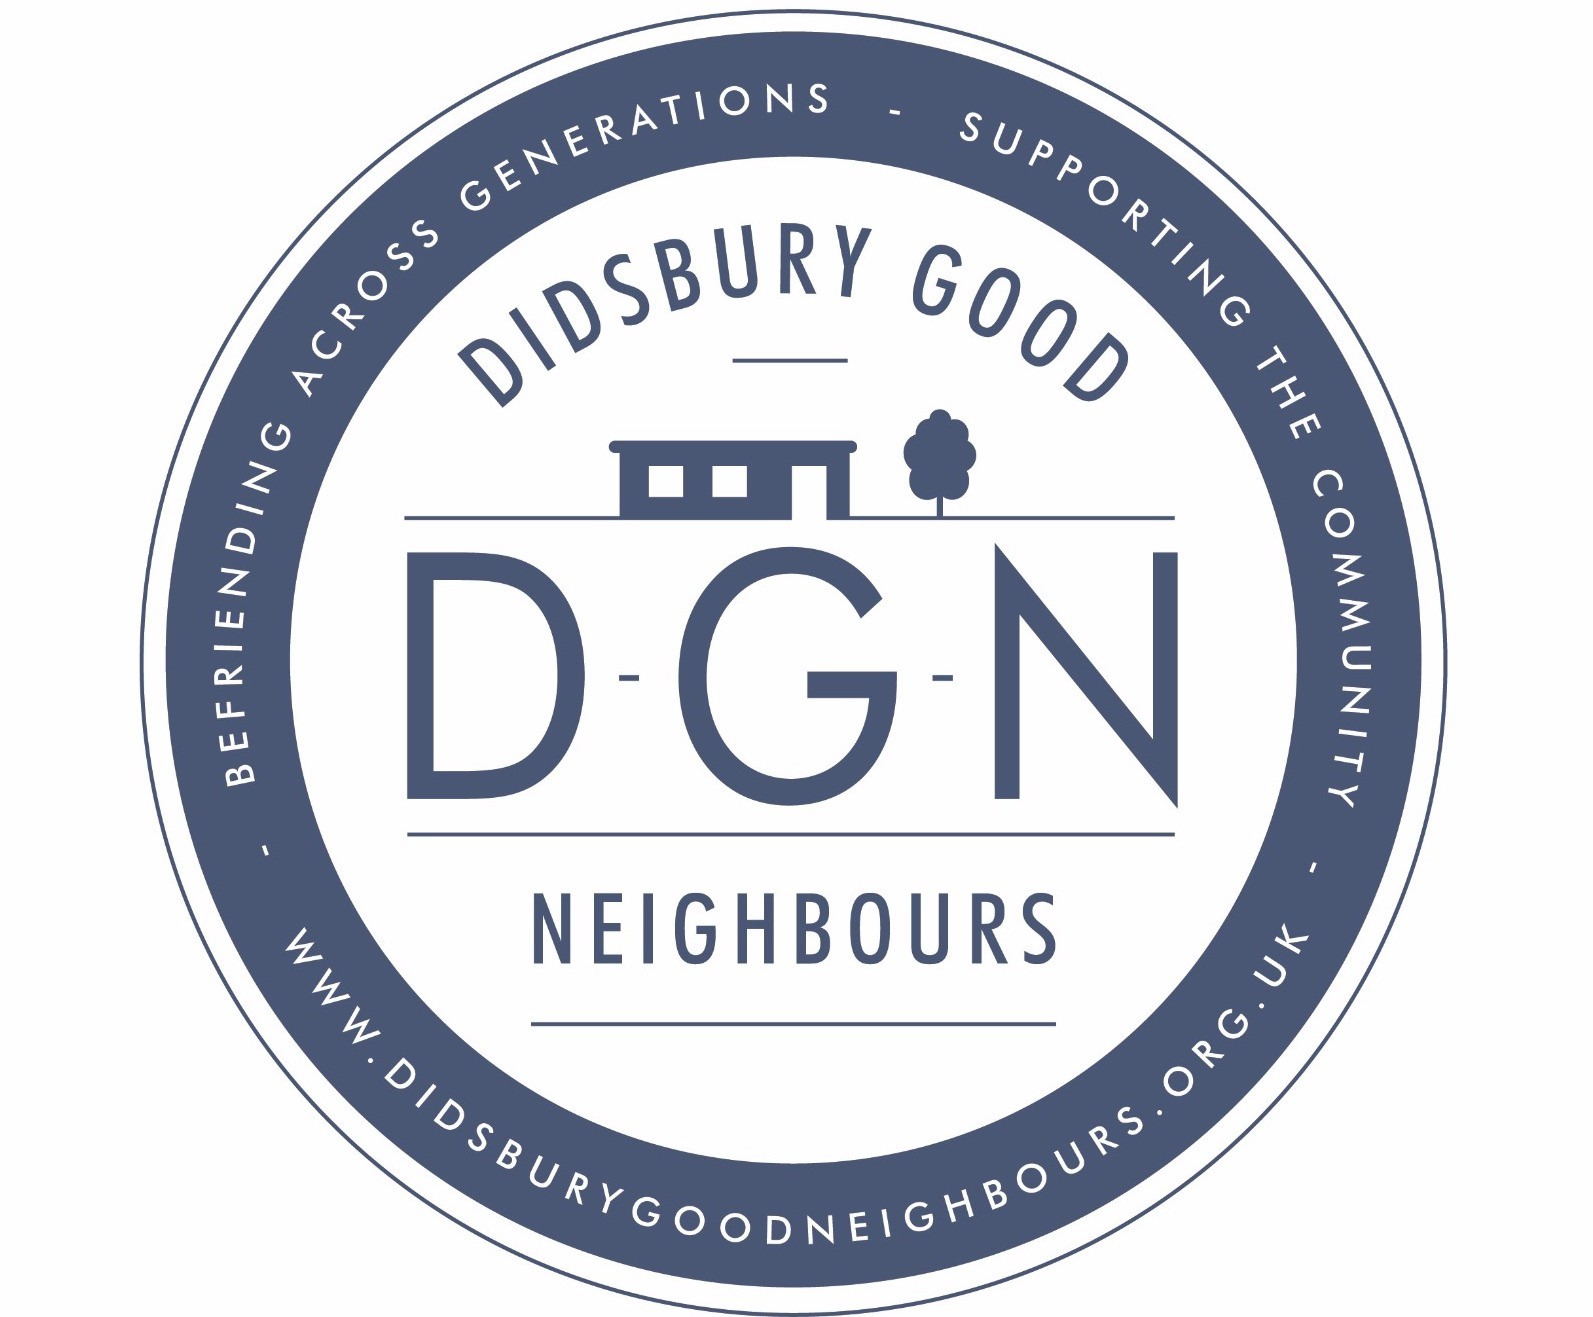 Didsbury Good Neighbours, Befriending across Generations, supporting the community